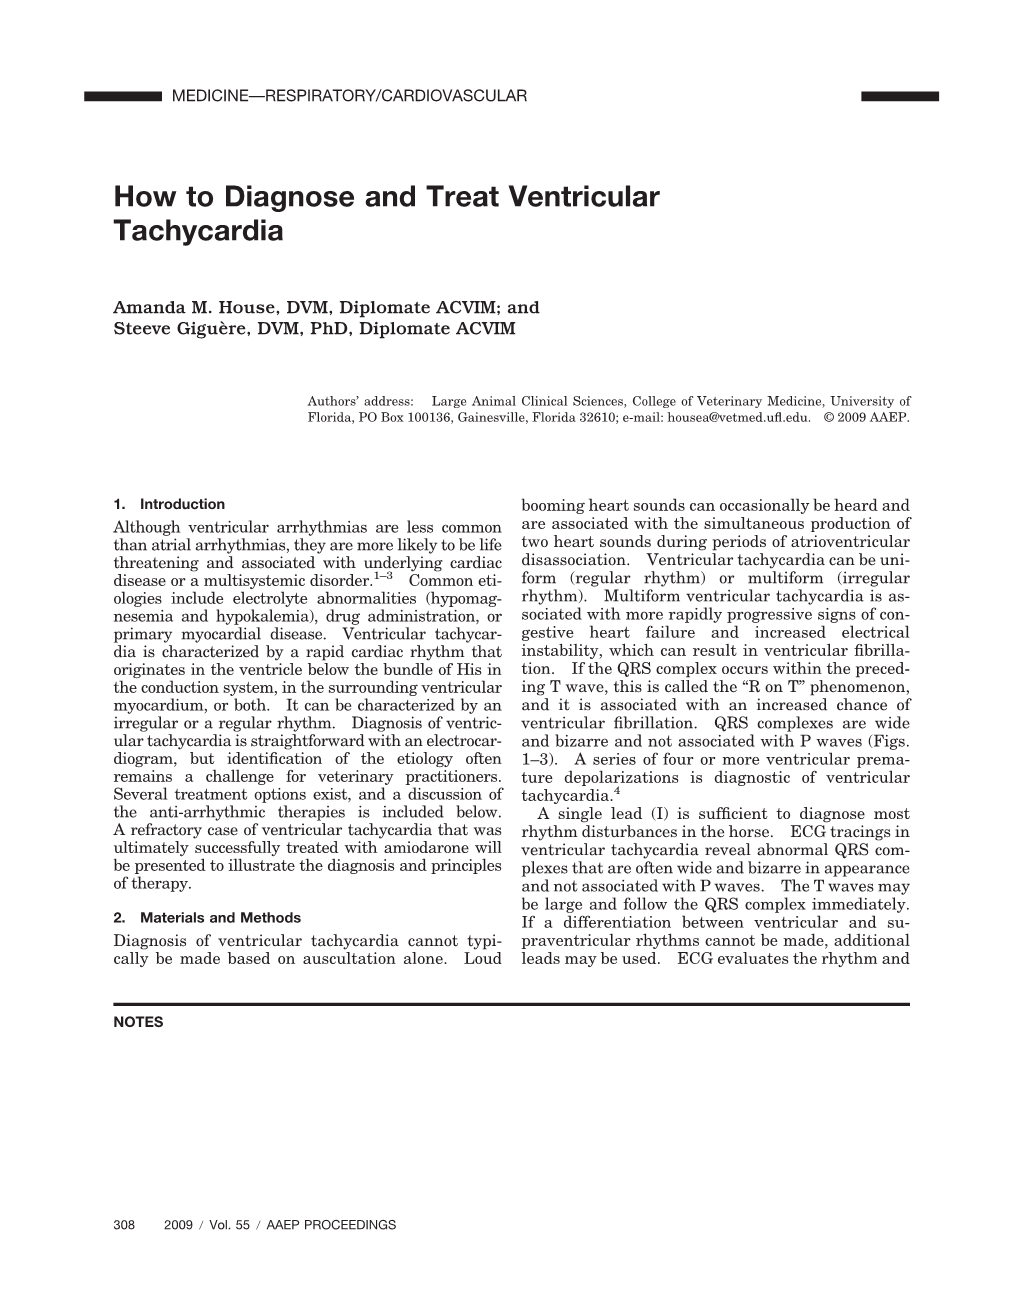 How to Diagnose and Treat Ventricular Tachycardia